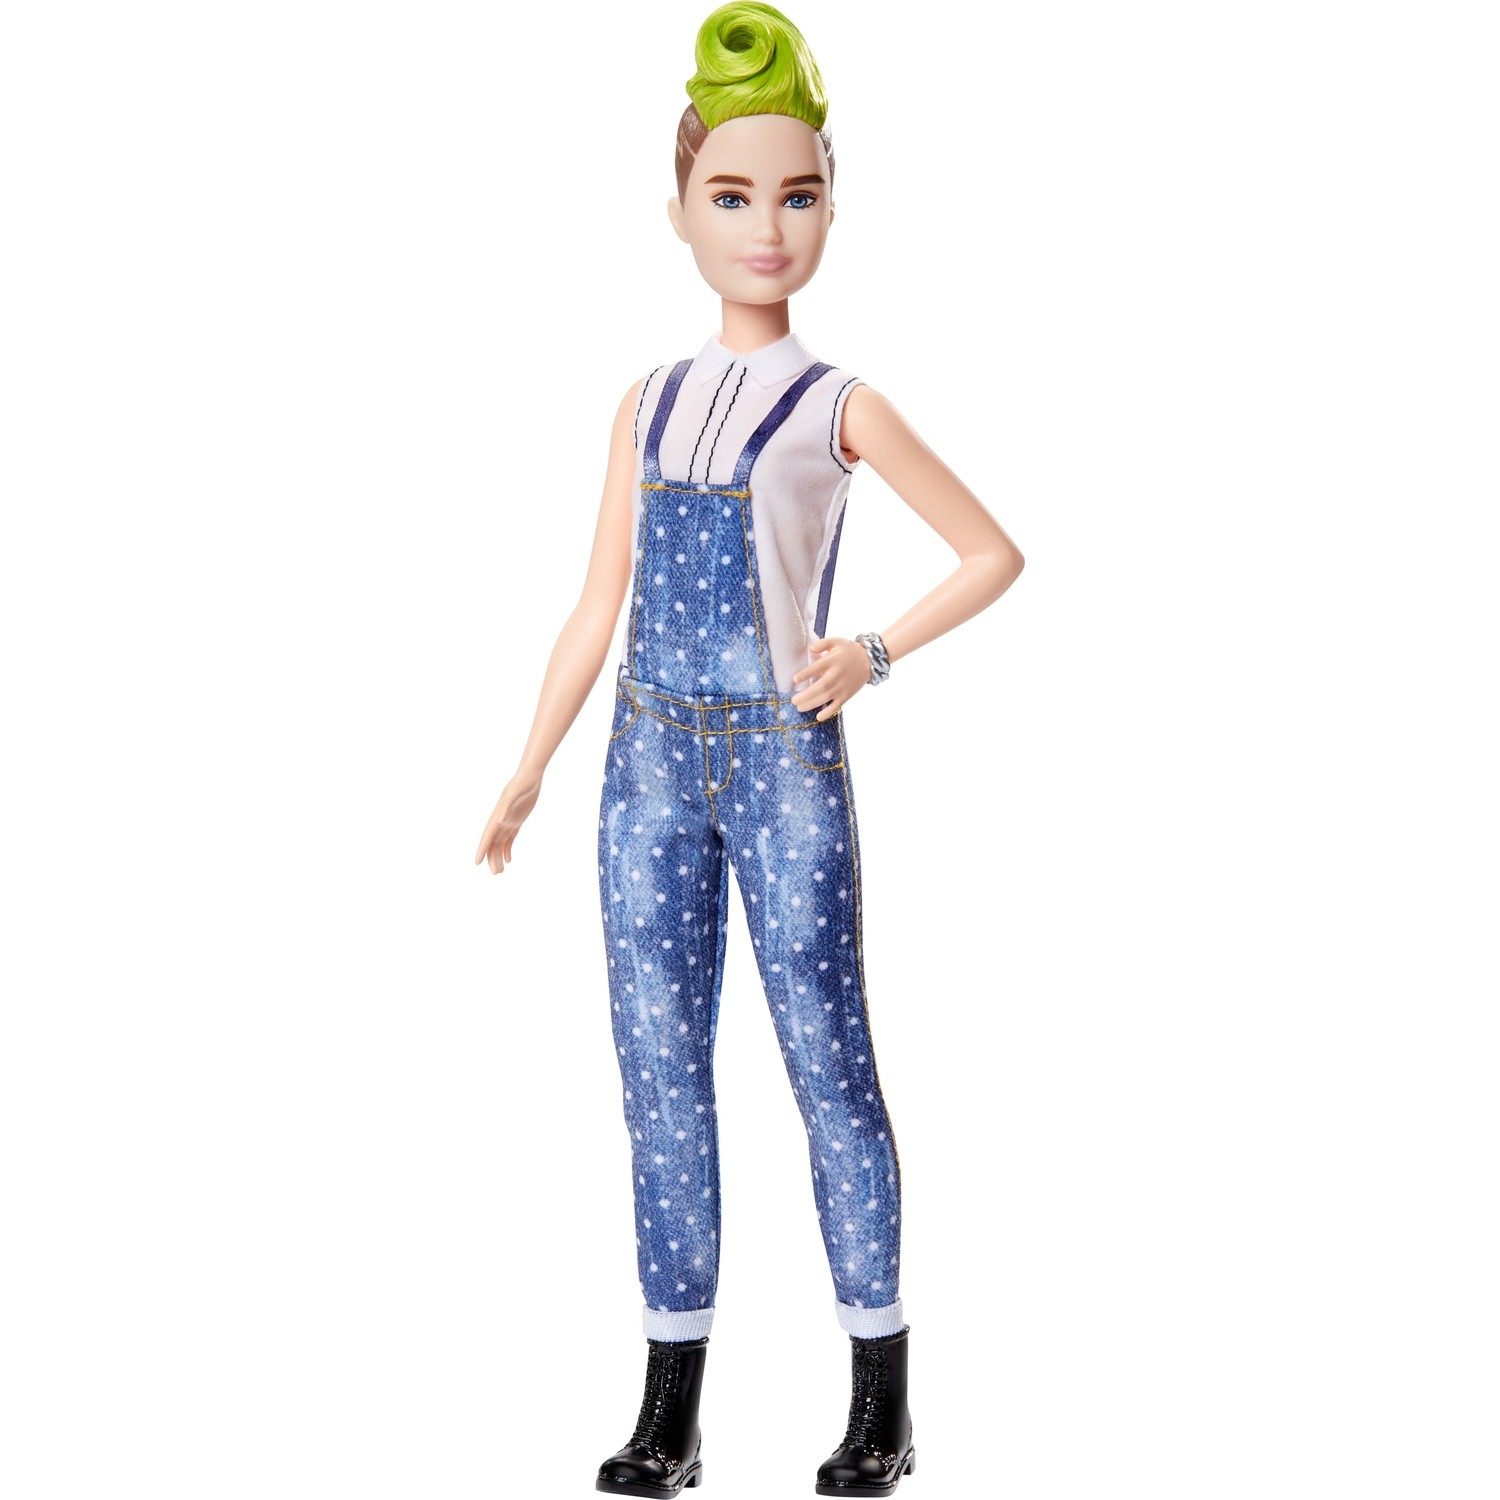 Куклы и аксессуары Barbie Fashionistas Green Mohawk Hair FXL57 кукла mattel barbie fashionistas игра с модой блондинка t7580 grb32